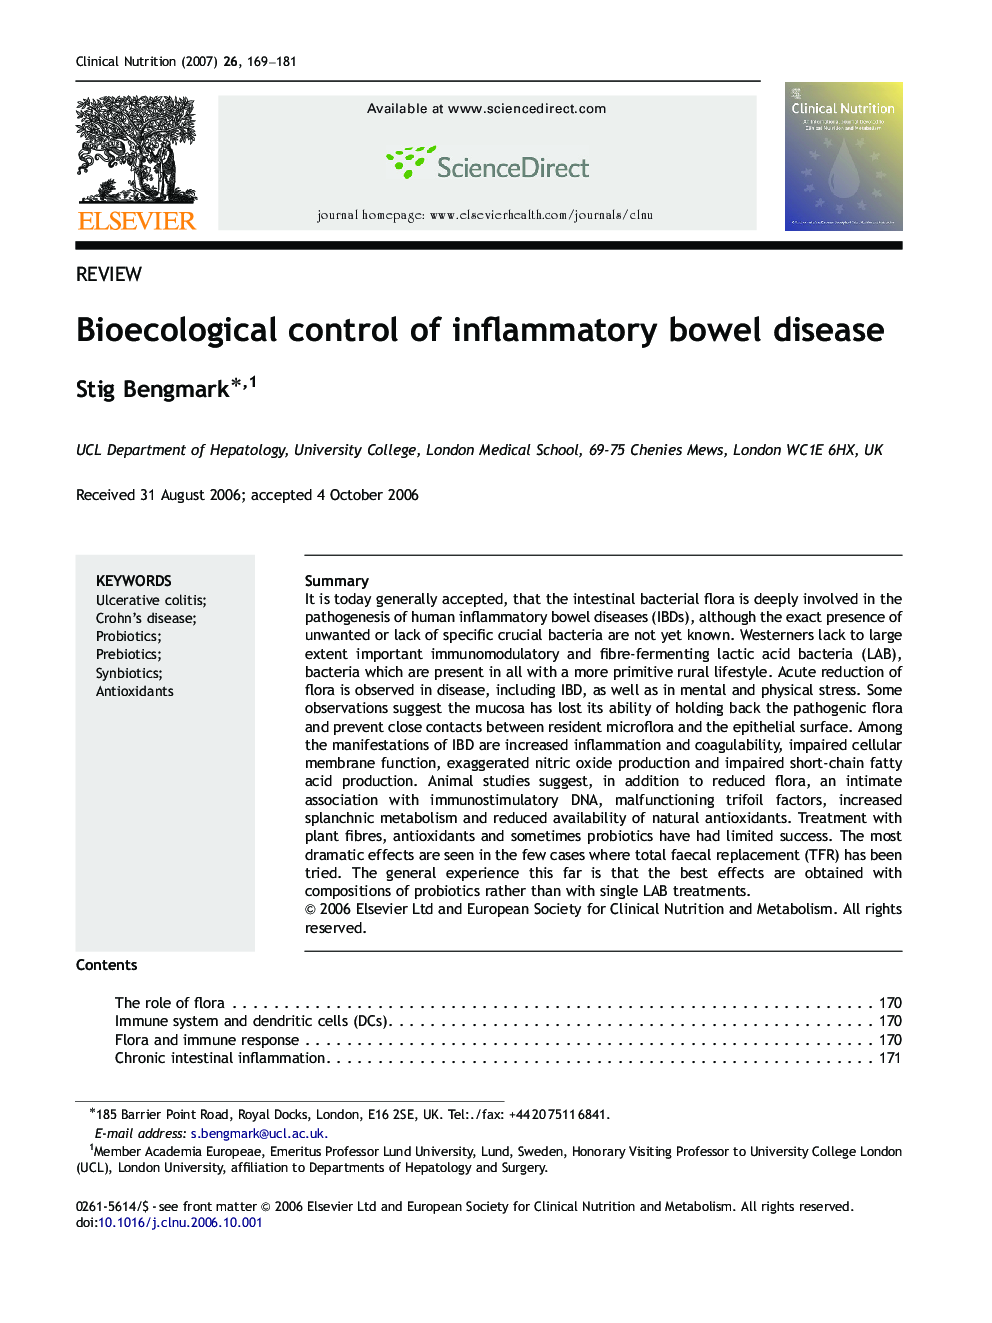 Bioecological control of inflammatory bowel disease